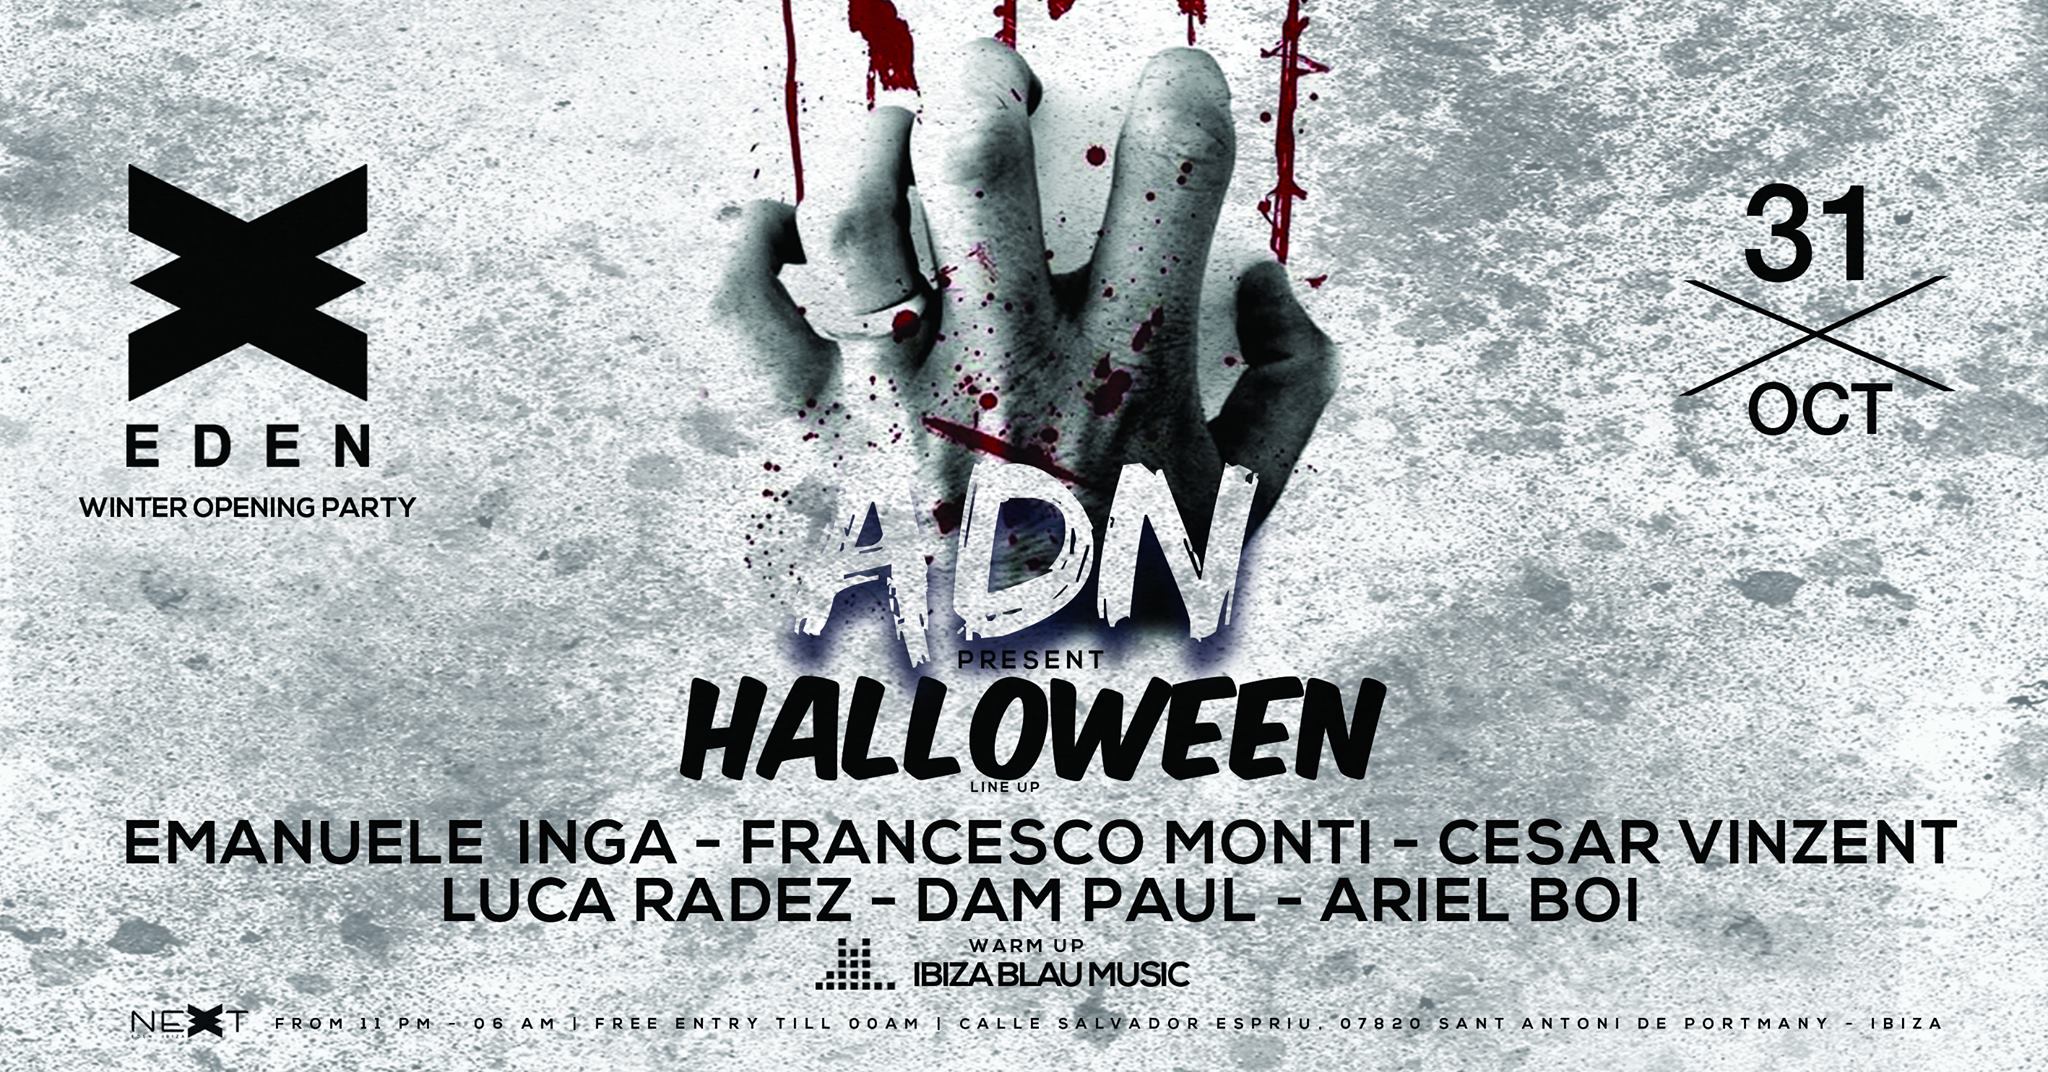 Halloween Ibiza, hosted by ADN @ EDEN